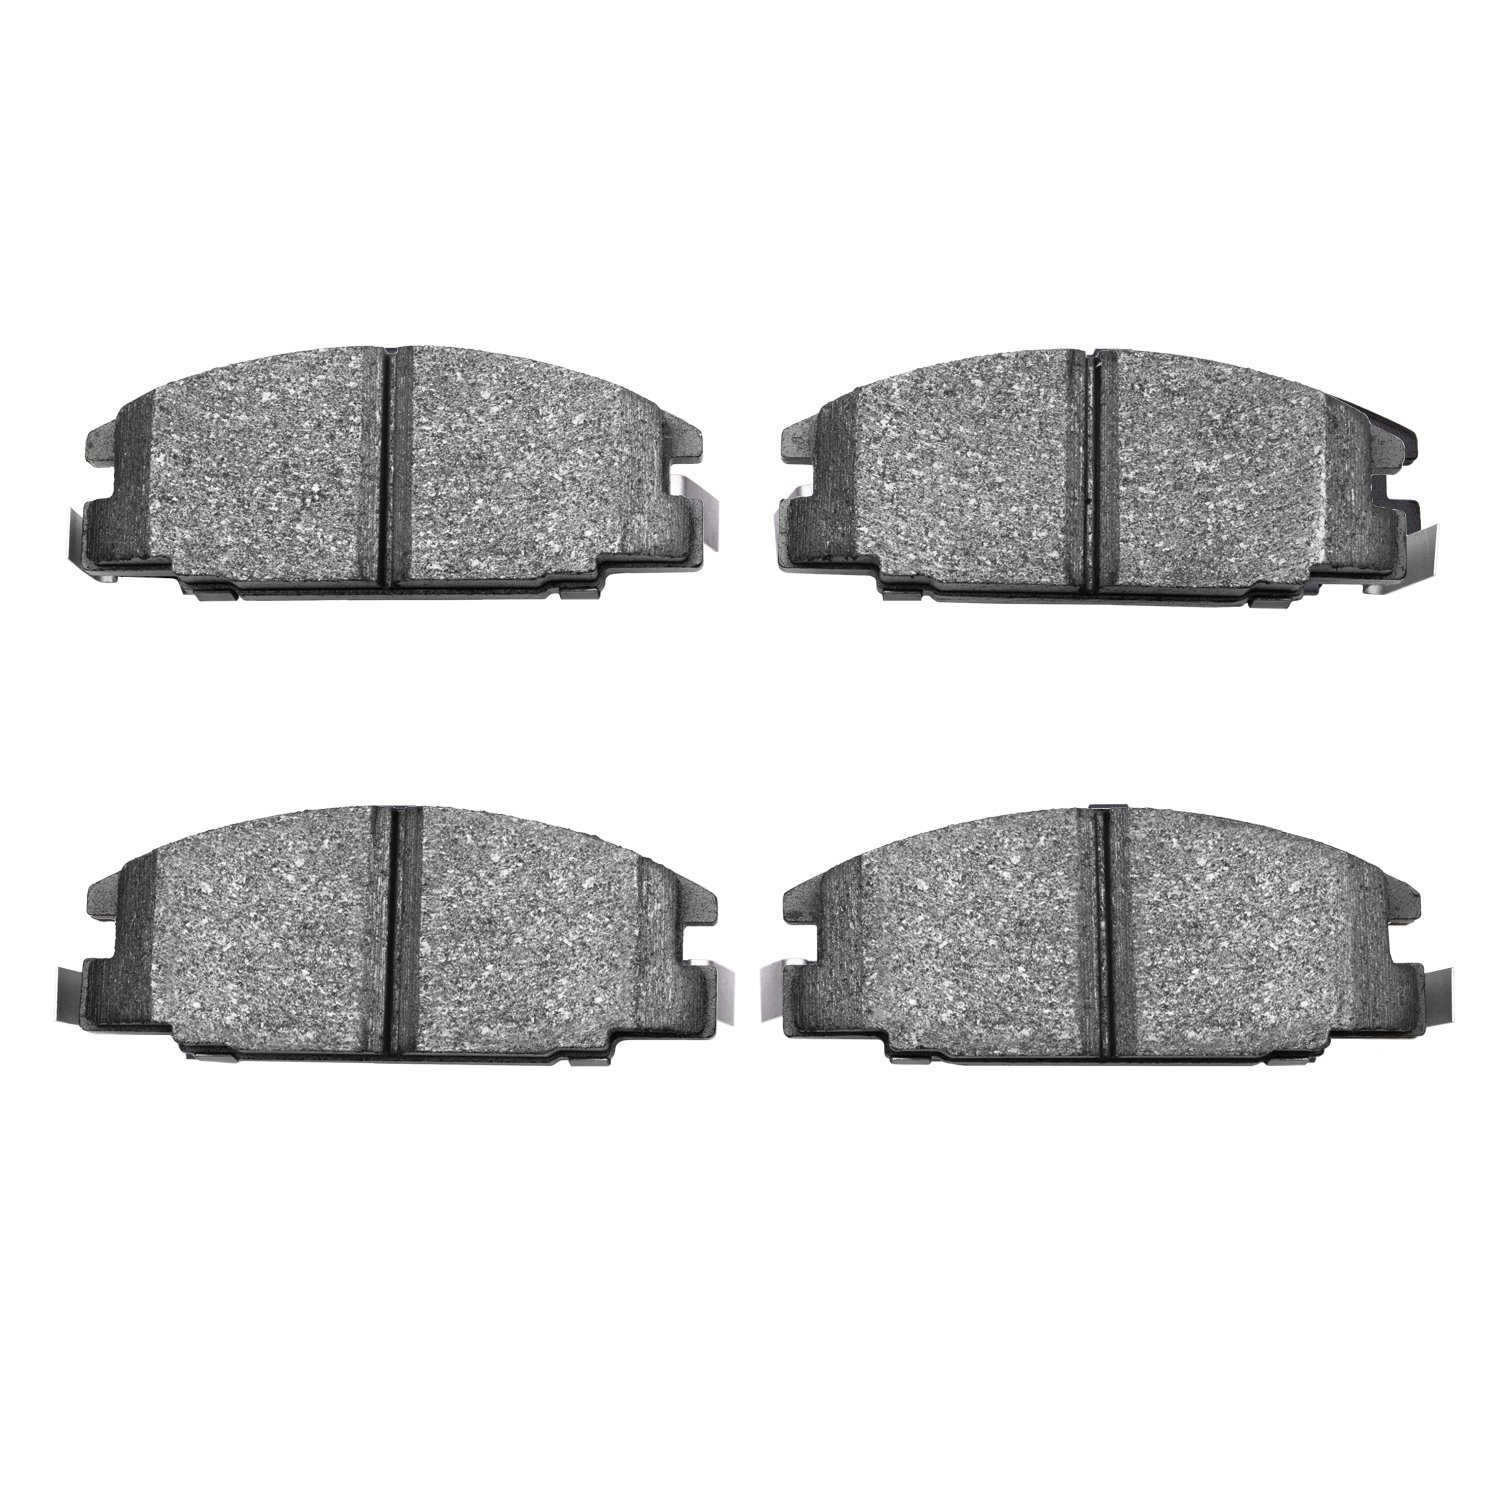 1310-0363-00 3000-Series Ceramic Brake Pads, 1986-2006 Multiple Makes/Models, Position: Front